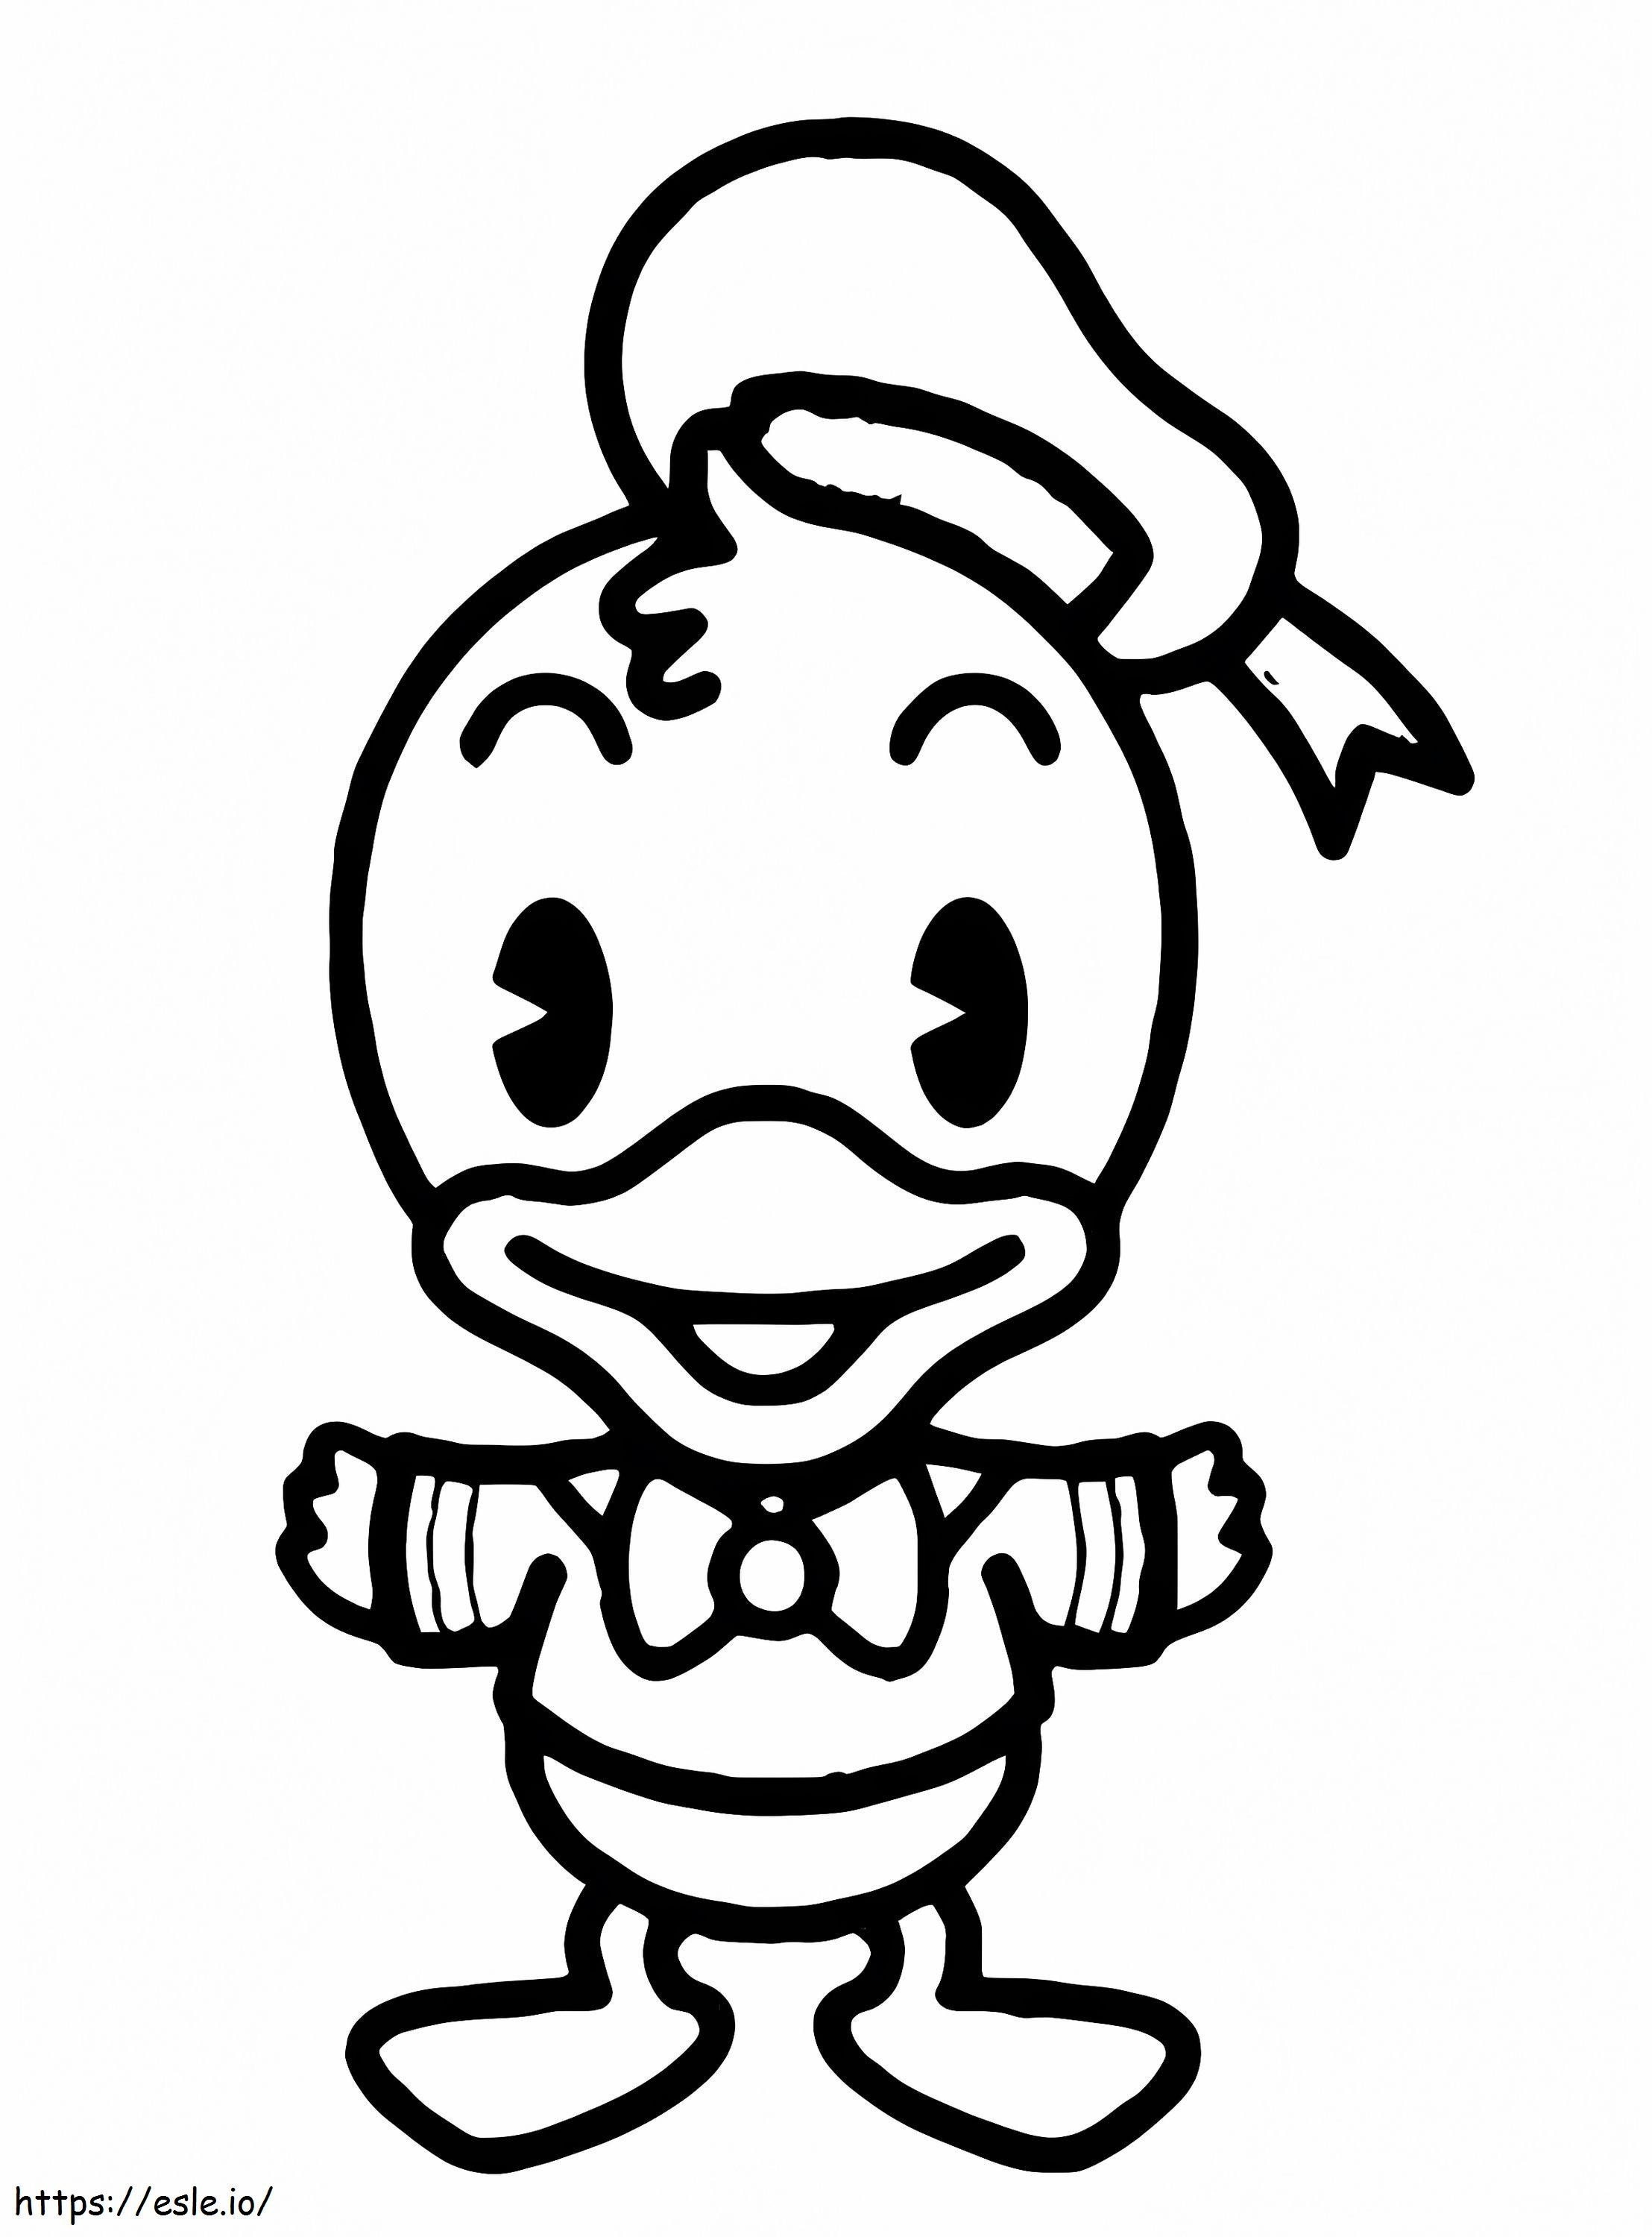 Donald Duck Disney Cuties coloring page